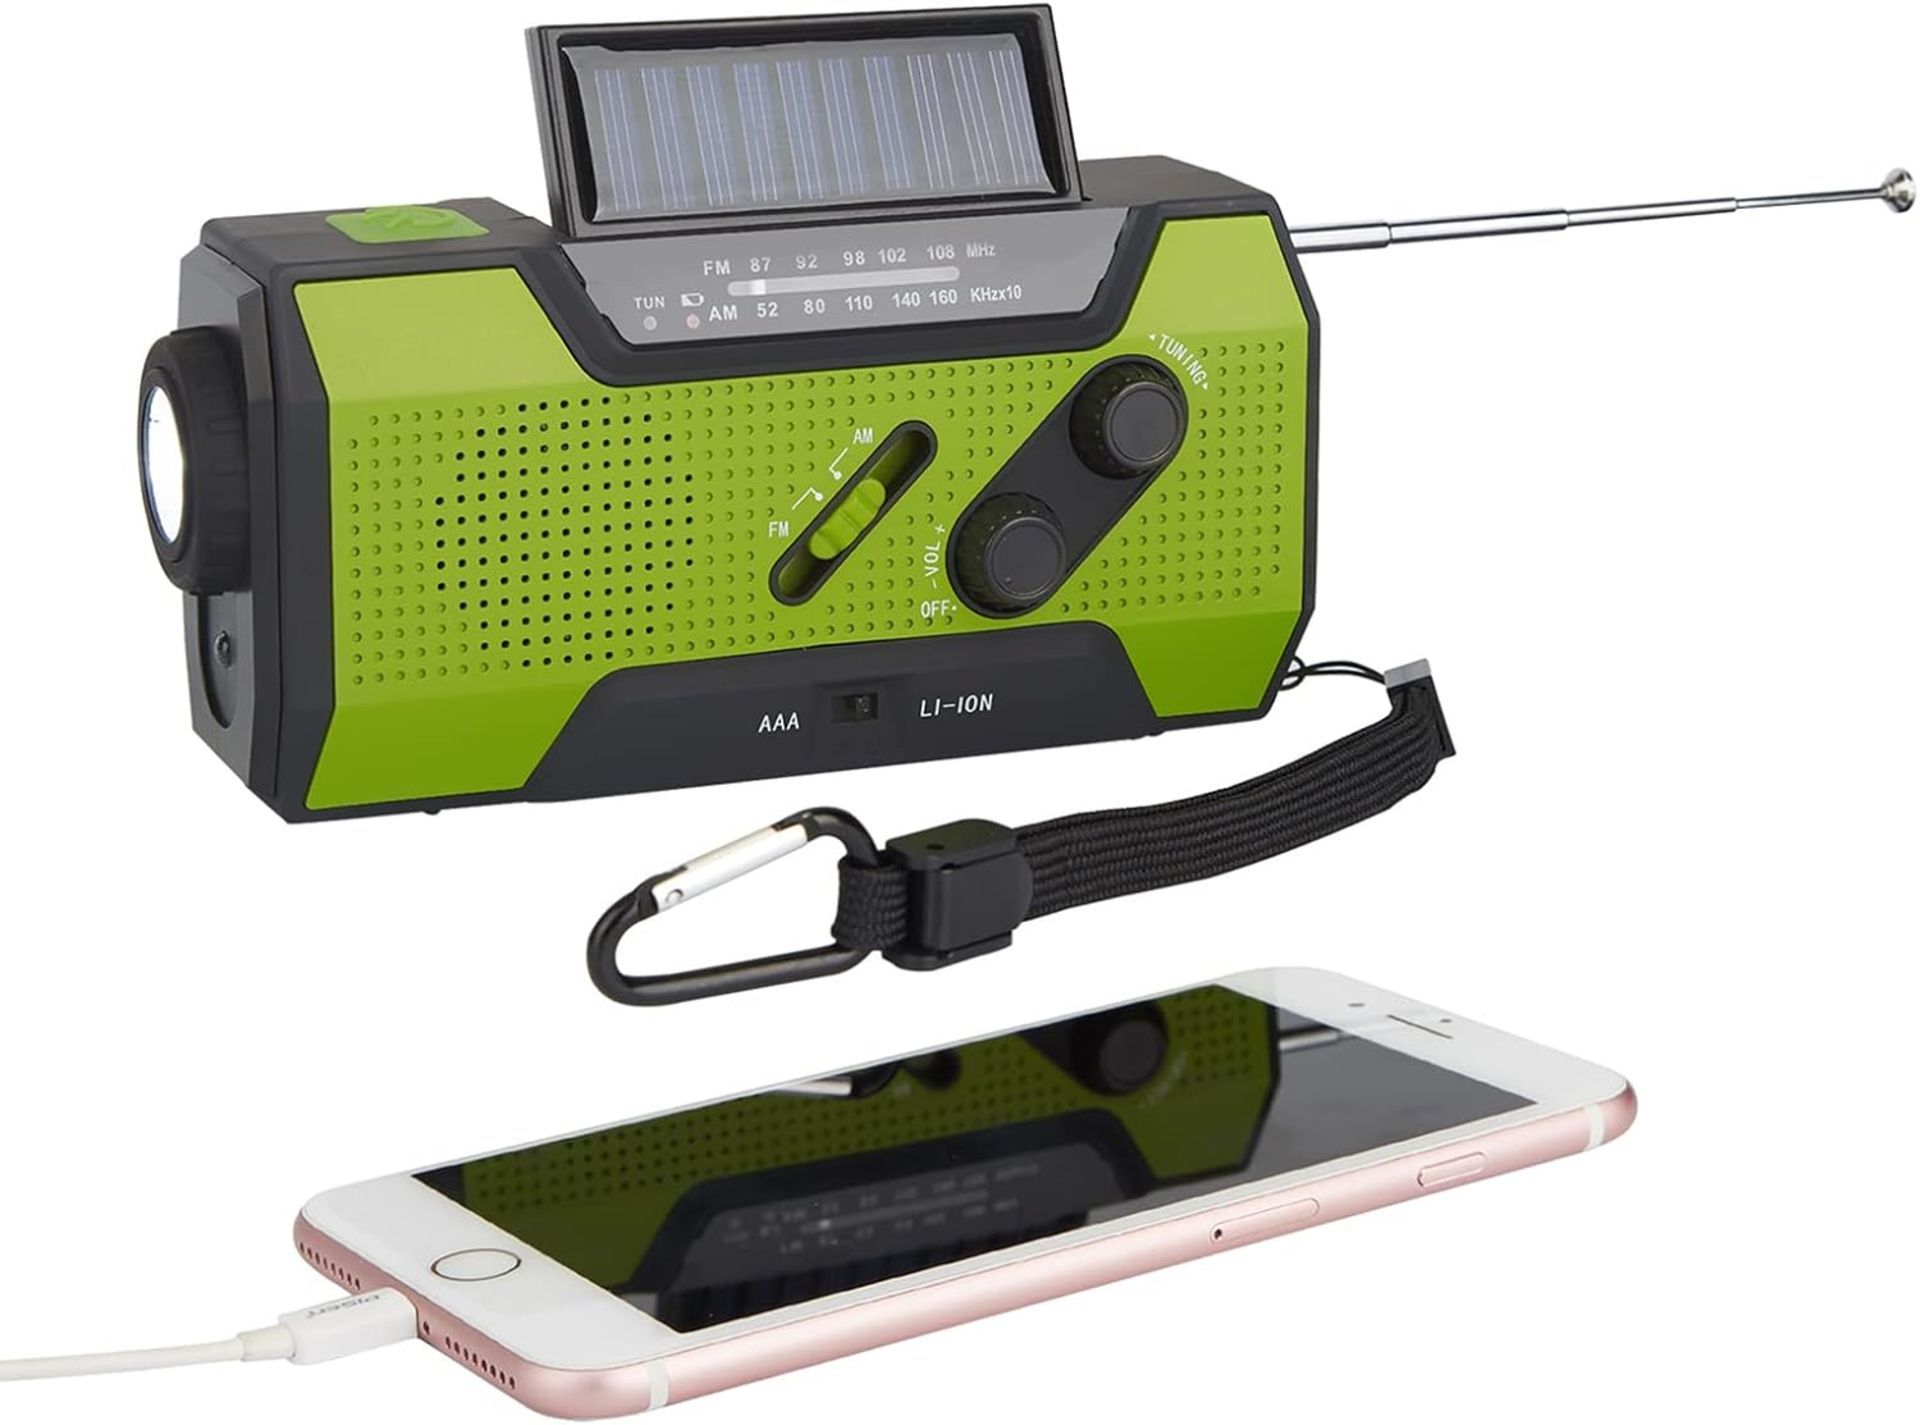 TKOOFN Hand Crank Emergency Radio FM AM, Portable Solar Generation Multifunction Outdoor Radio USB